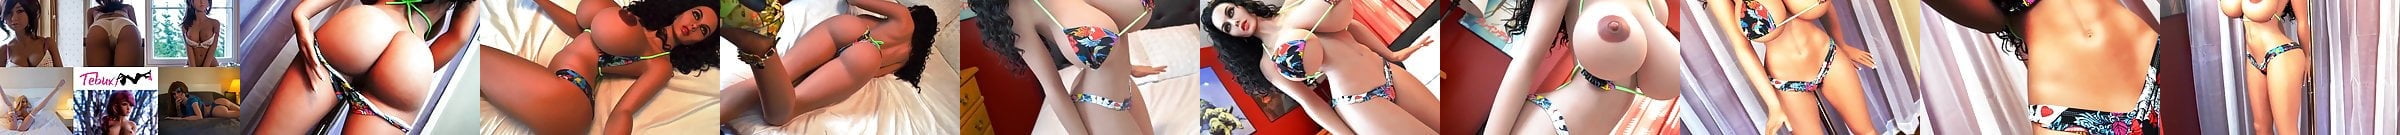 Busty Realistic Sex Doll Anal Creampie Blowjob Fantasy